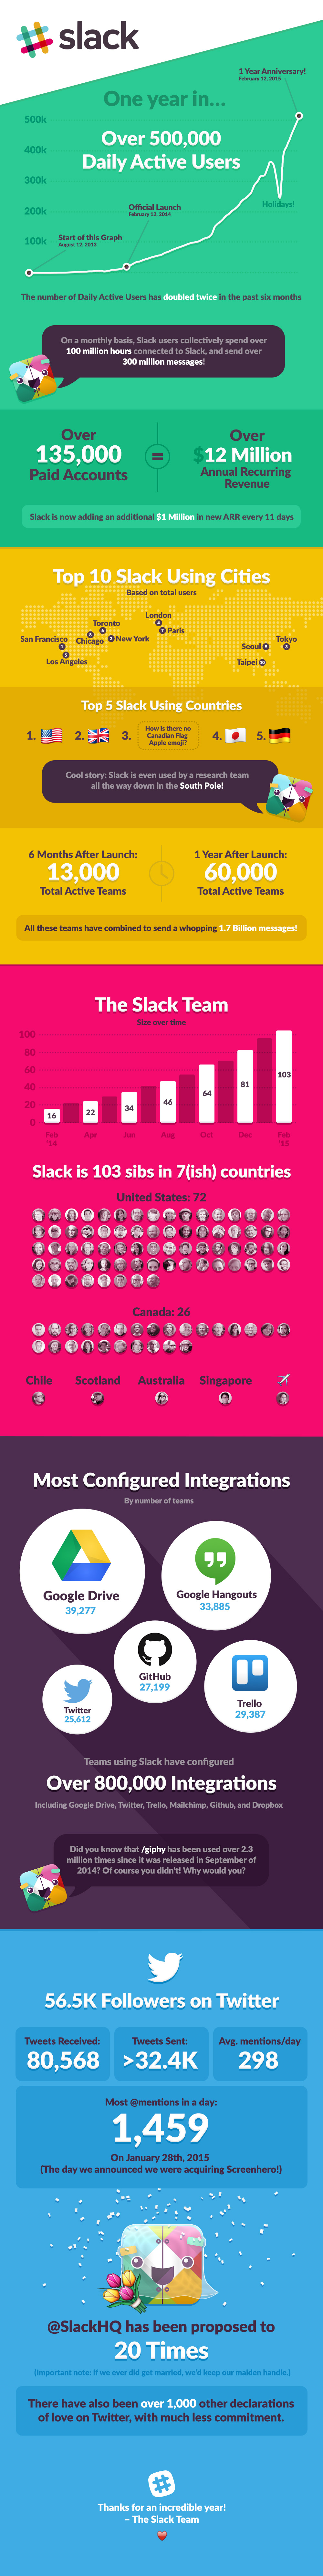 slack_anniversary_infographic